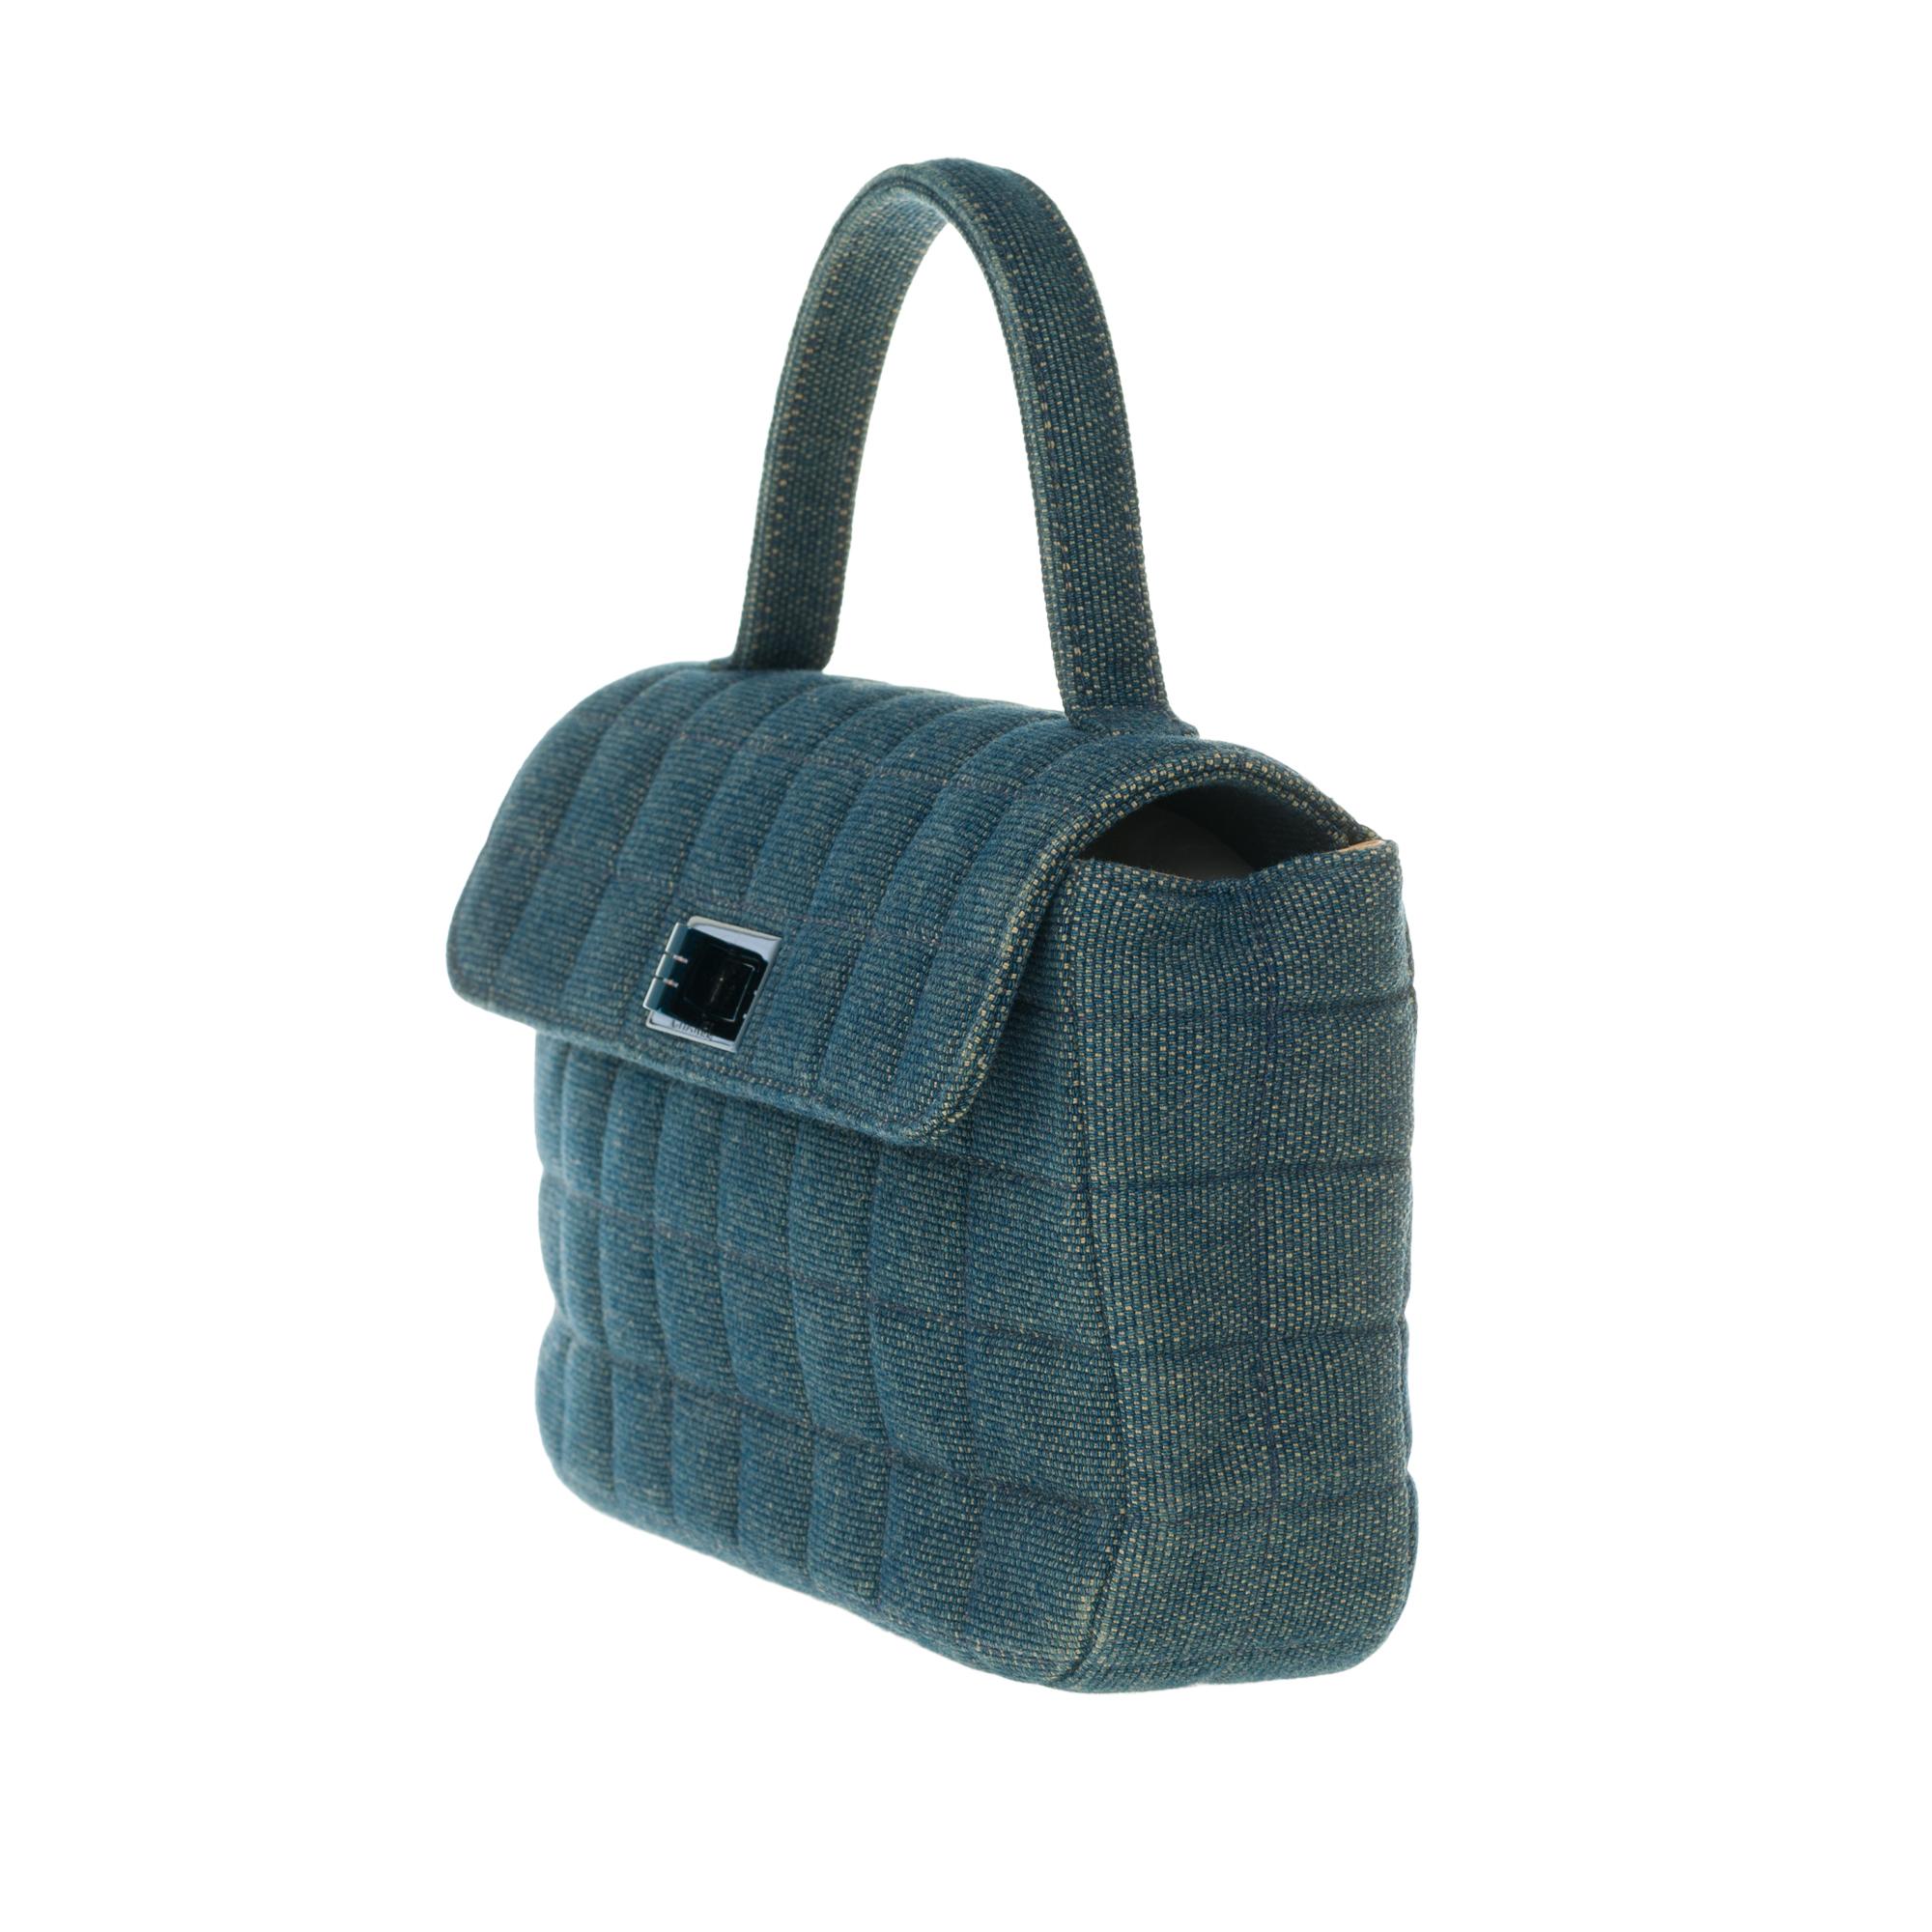 Black Amazing Chanel 2.55 handbag in blue denim